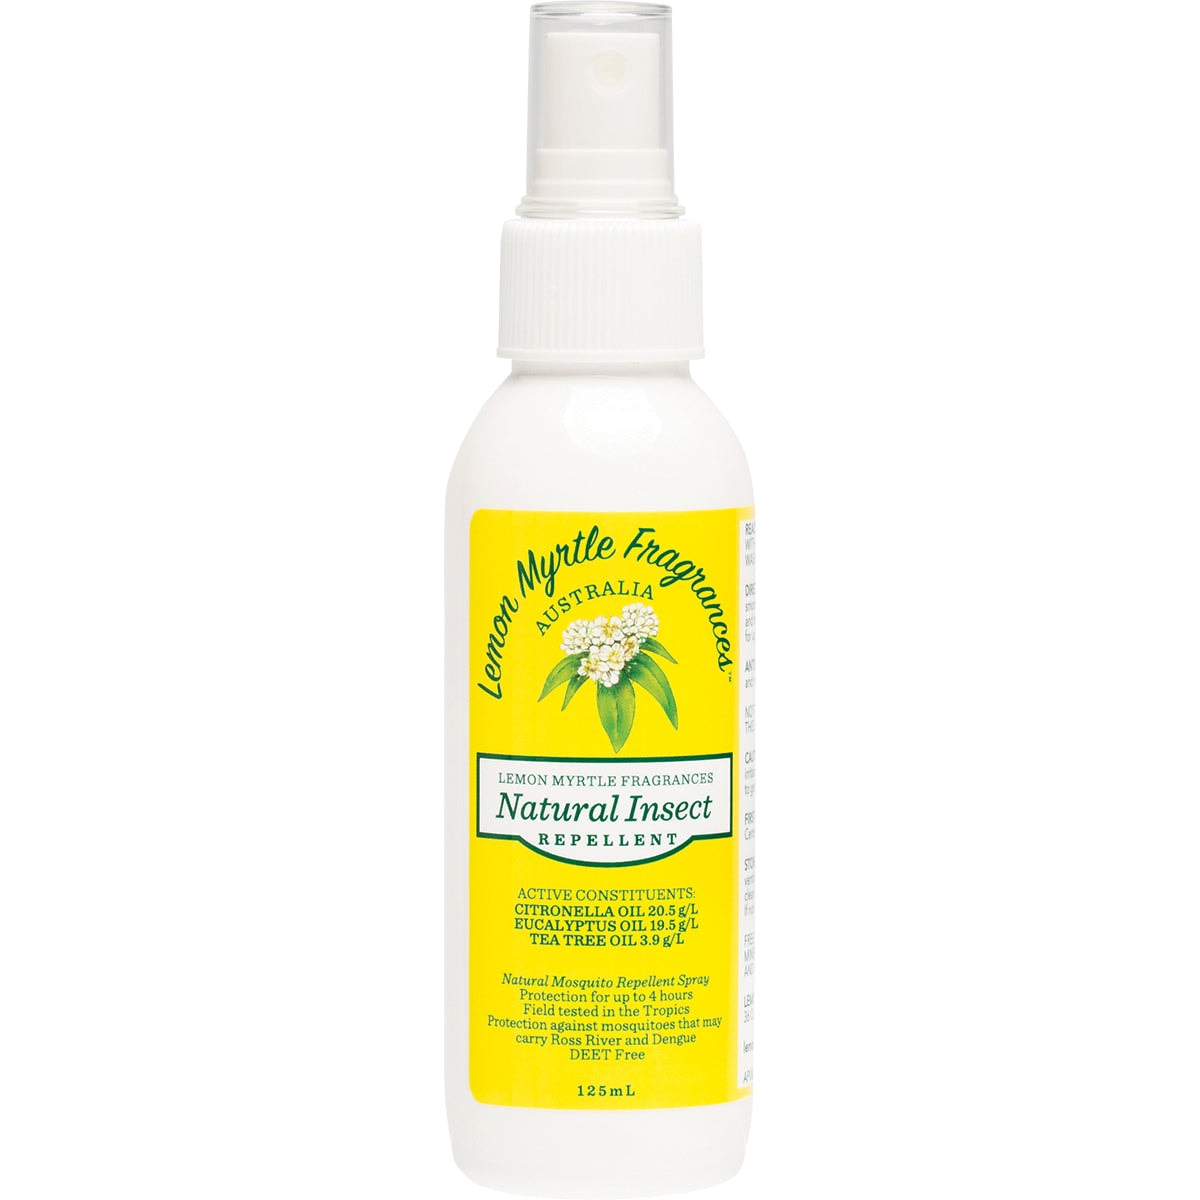 Lemon Myrtle Fragrances Natural Insect Repellent 125ml